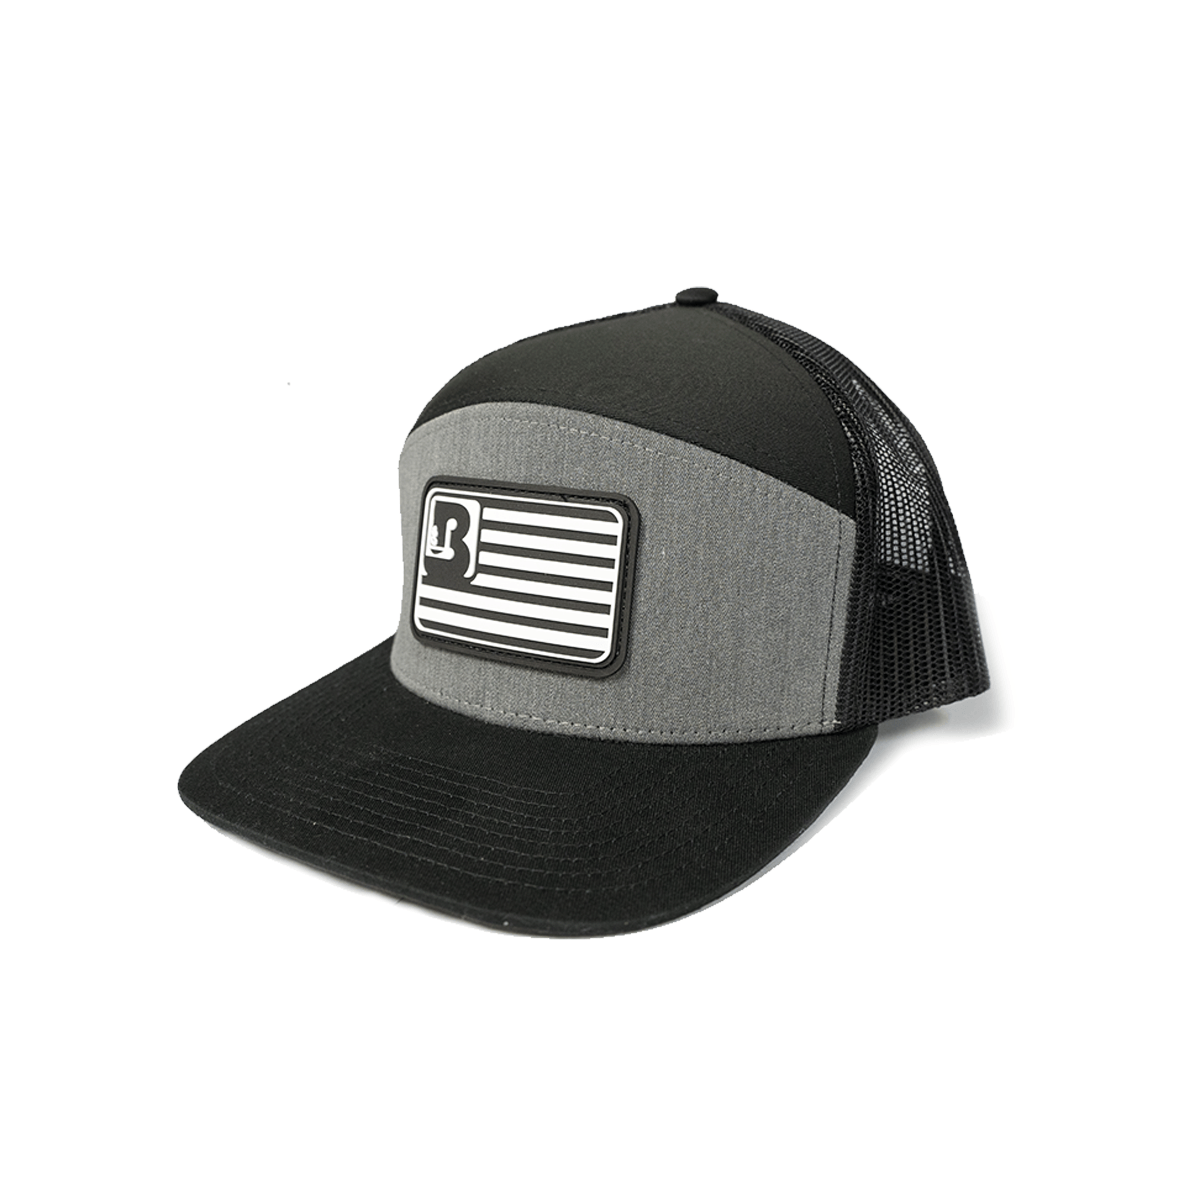 BoardCo Cobra Hat Grey/Black with Flag Patch - BoardCo